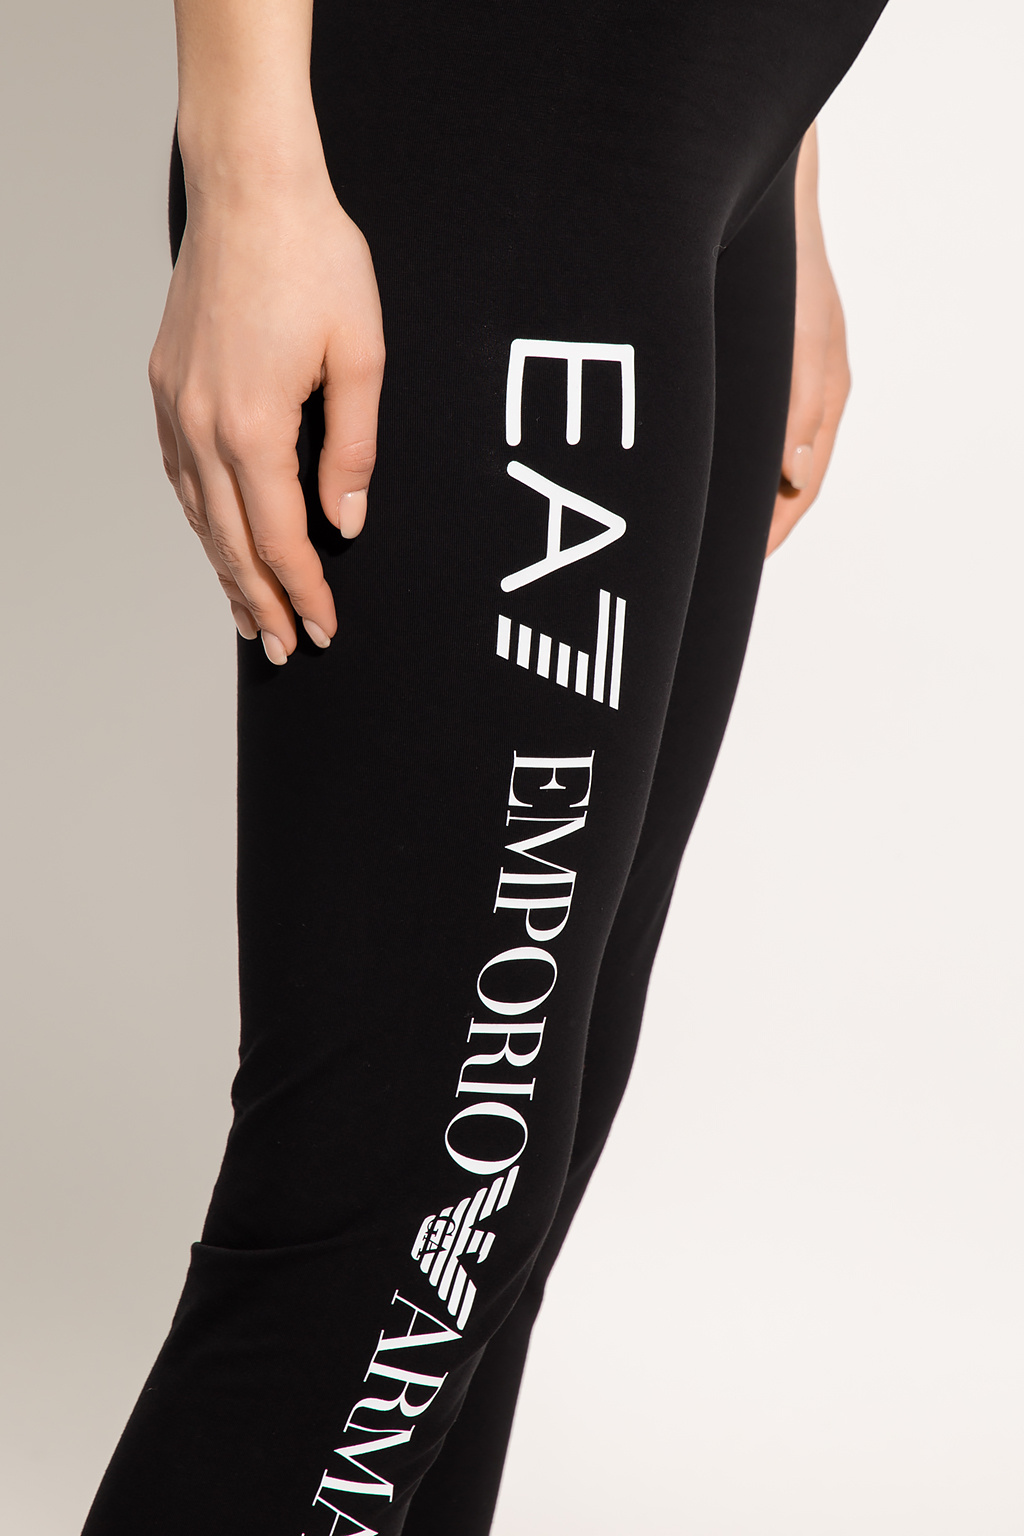 Ea7 emporio armani, Trousers & leggings, Women